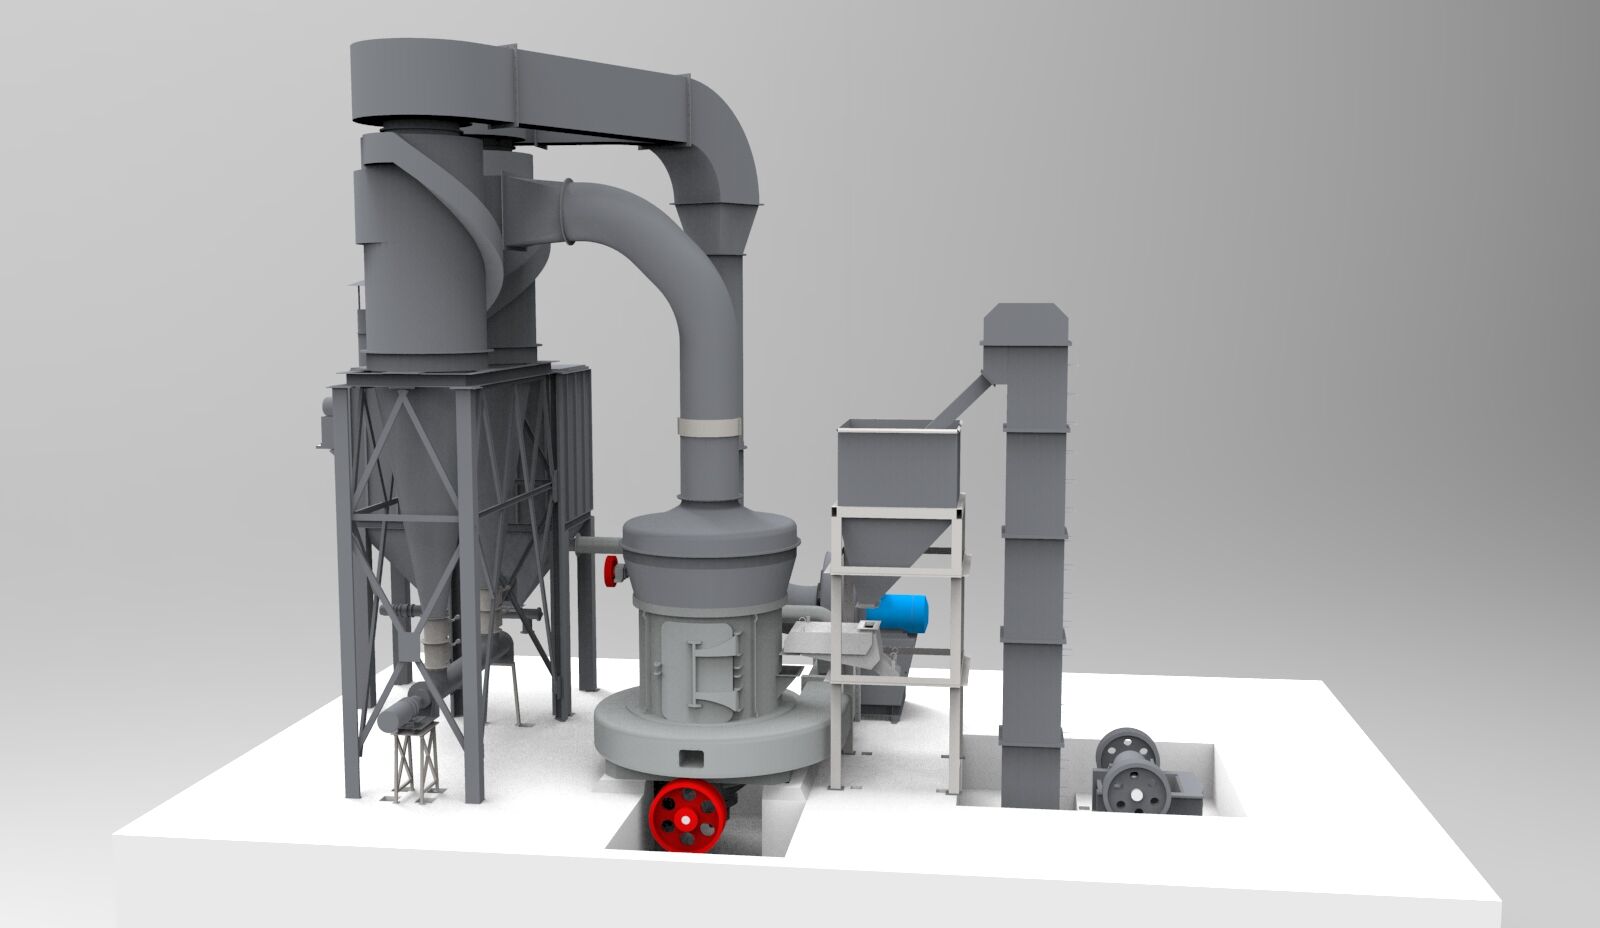 Calcium powder production line equipment Raymond mill model and parameters Grinding stone powder machine